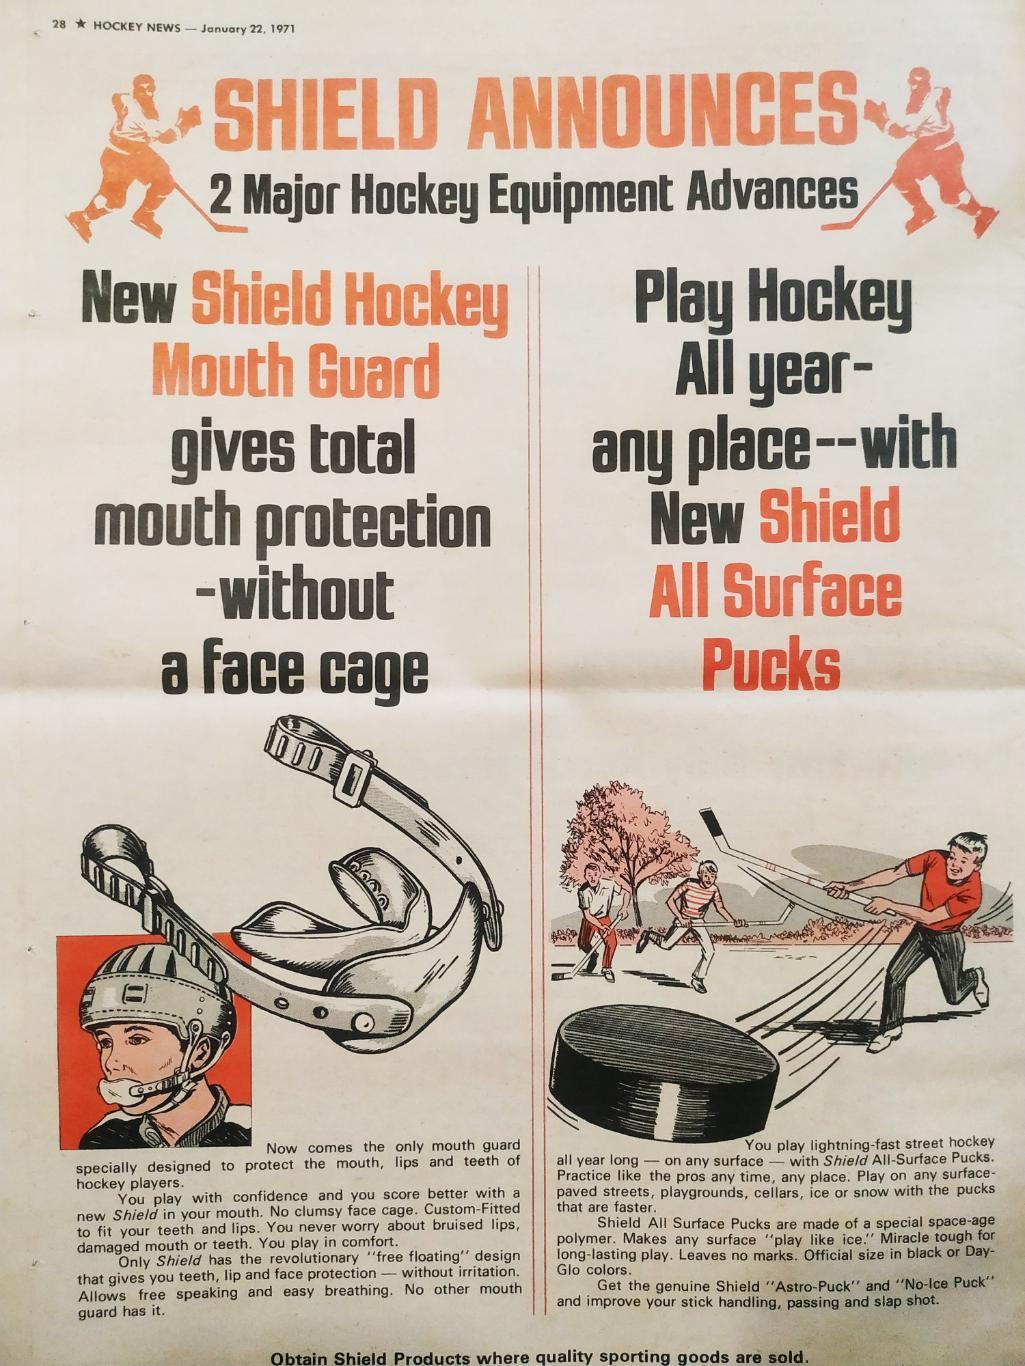 ХОККЕЙ ЖУРНАЛ ЕЖЕНЕДЕЛЬНИК НХЛ НОВОСТИ ХОККЕЯ JAN.22 1971 NHL THE HOCKEY NEWS 5